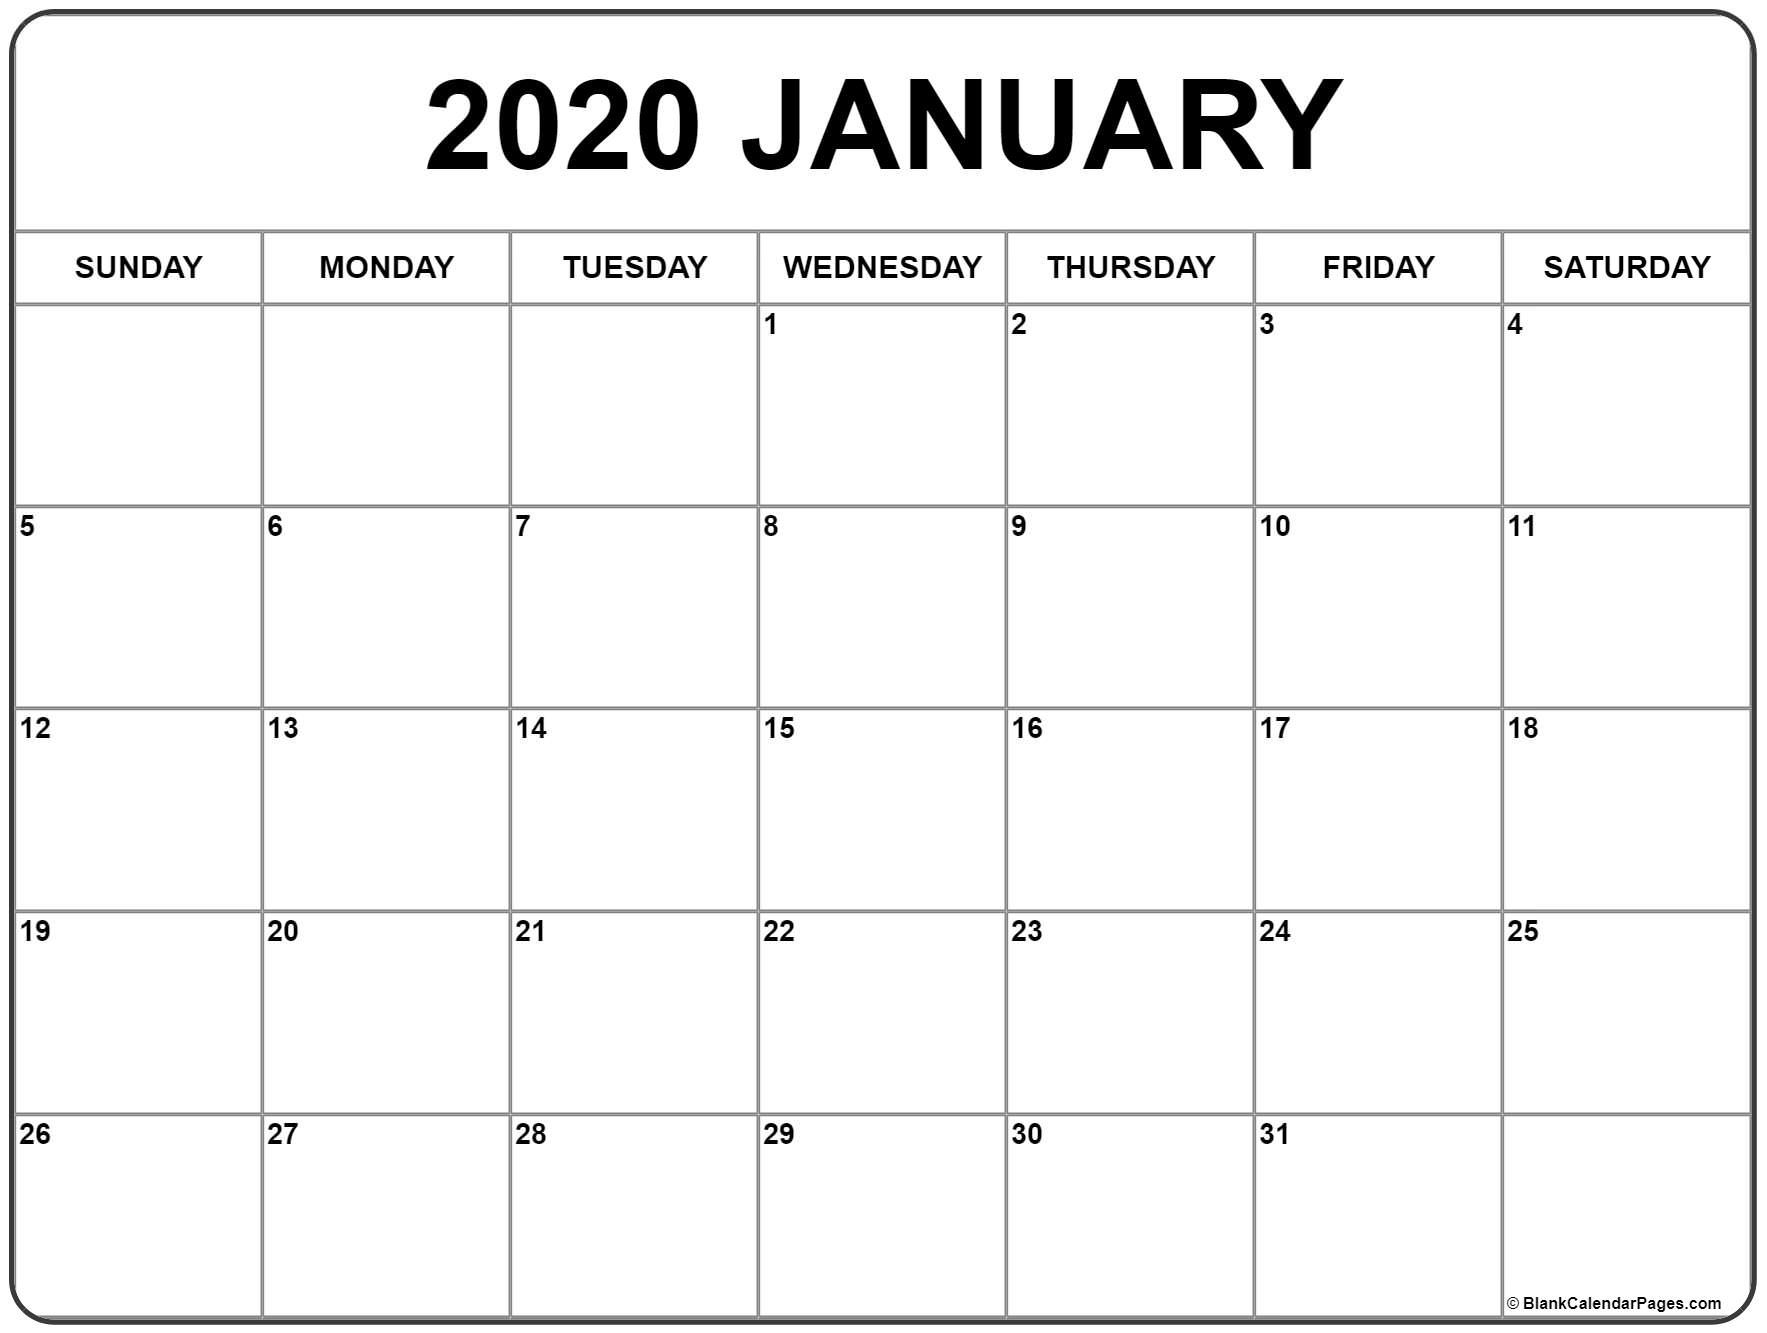 Jan 2020 Calendar Template  Yatay.horizonconsulting.co with regard to January 2020 Calendar 123Calendars